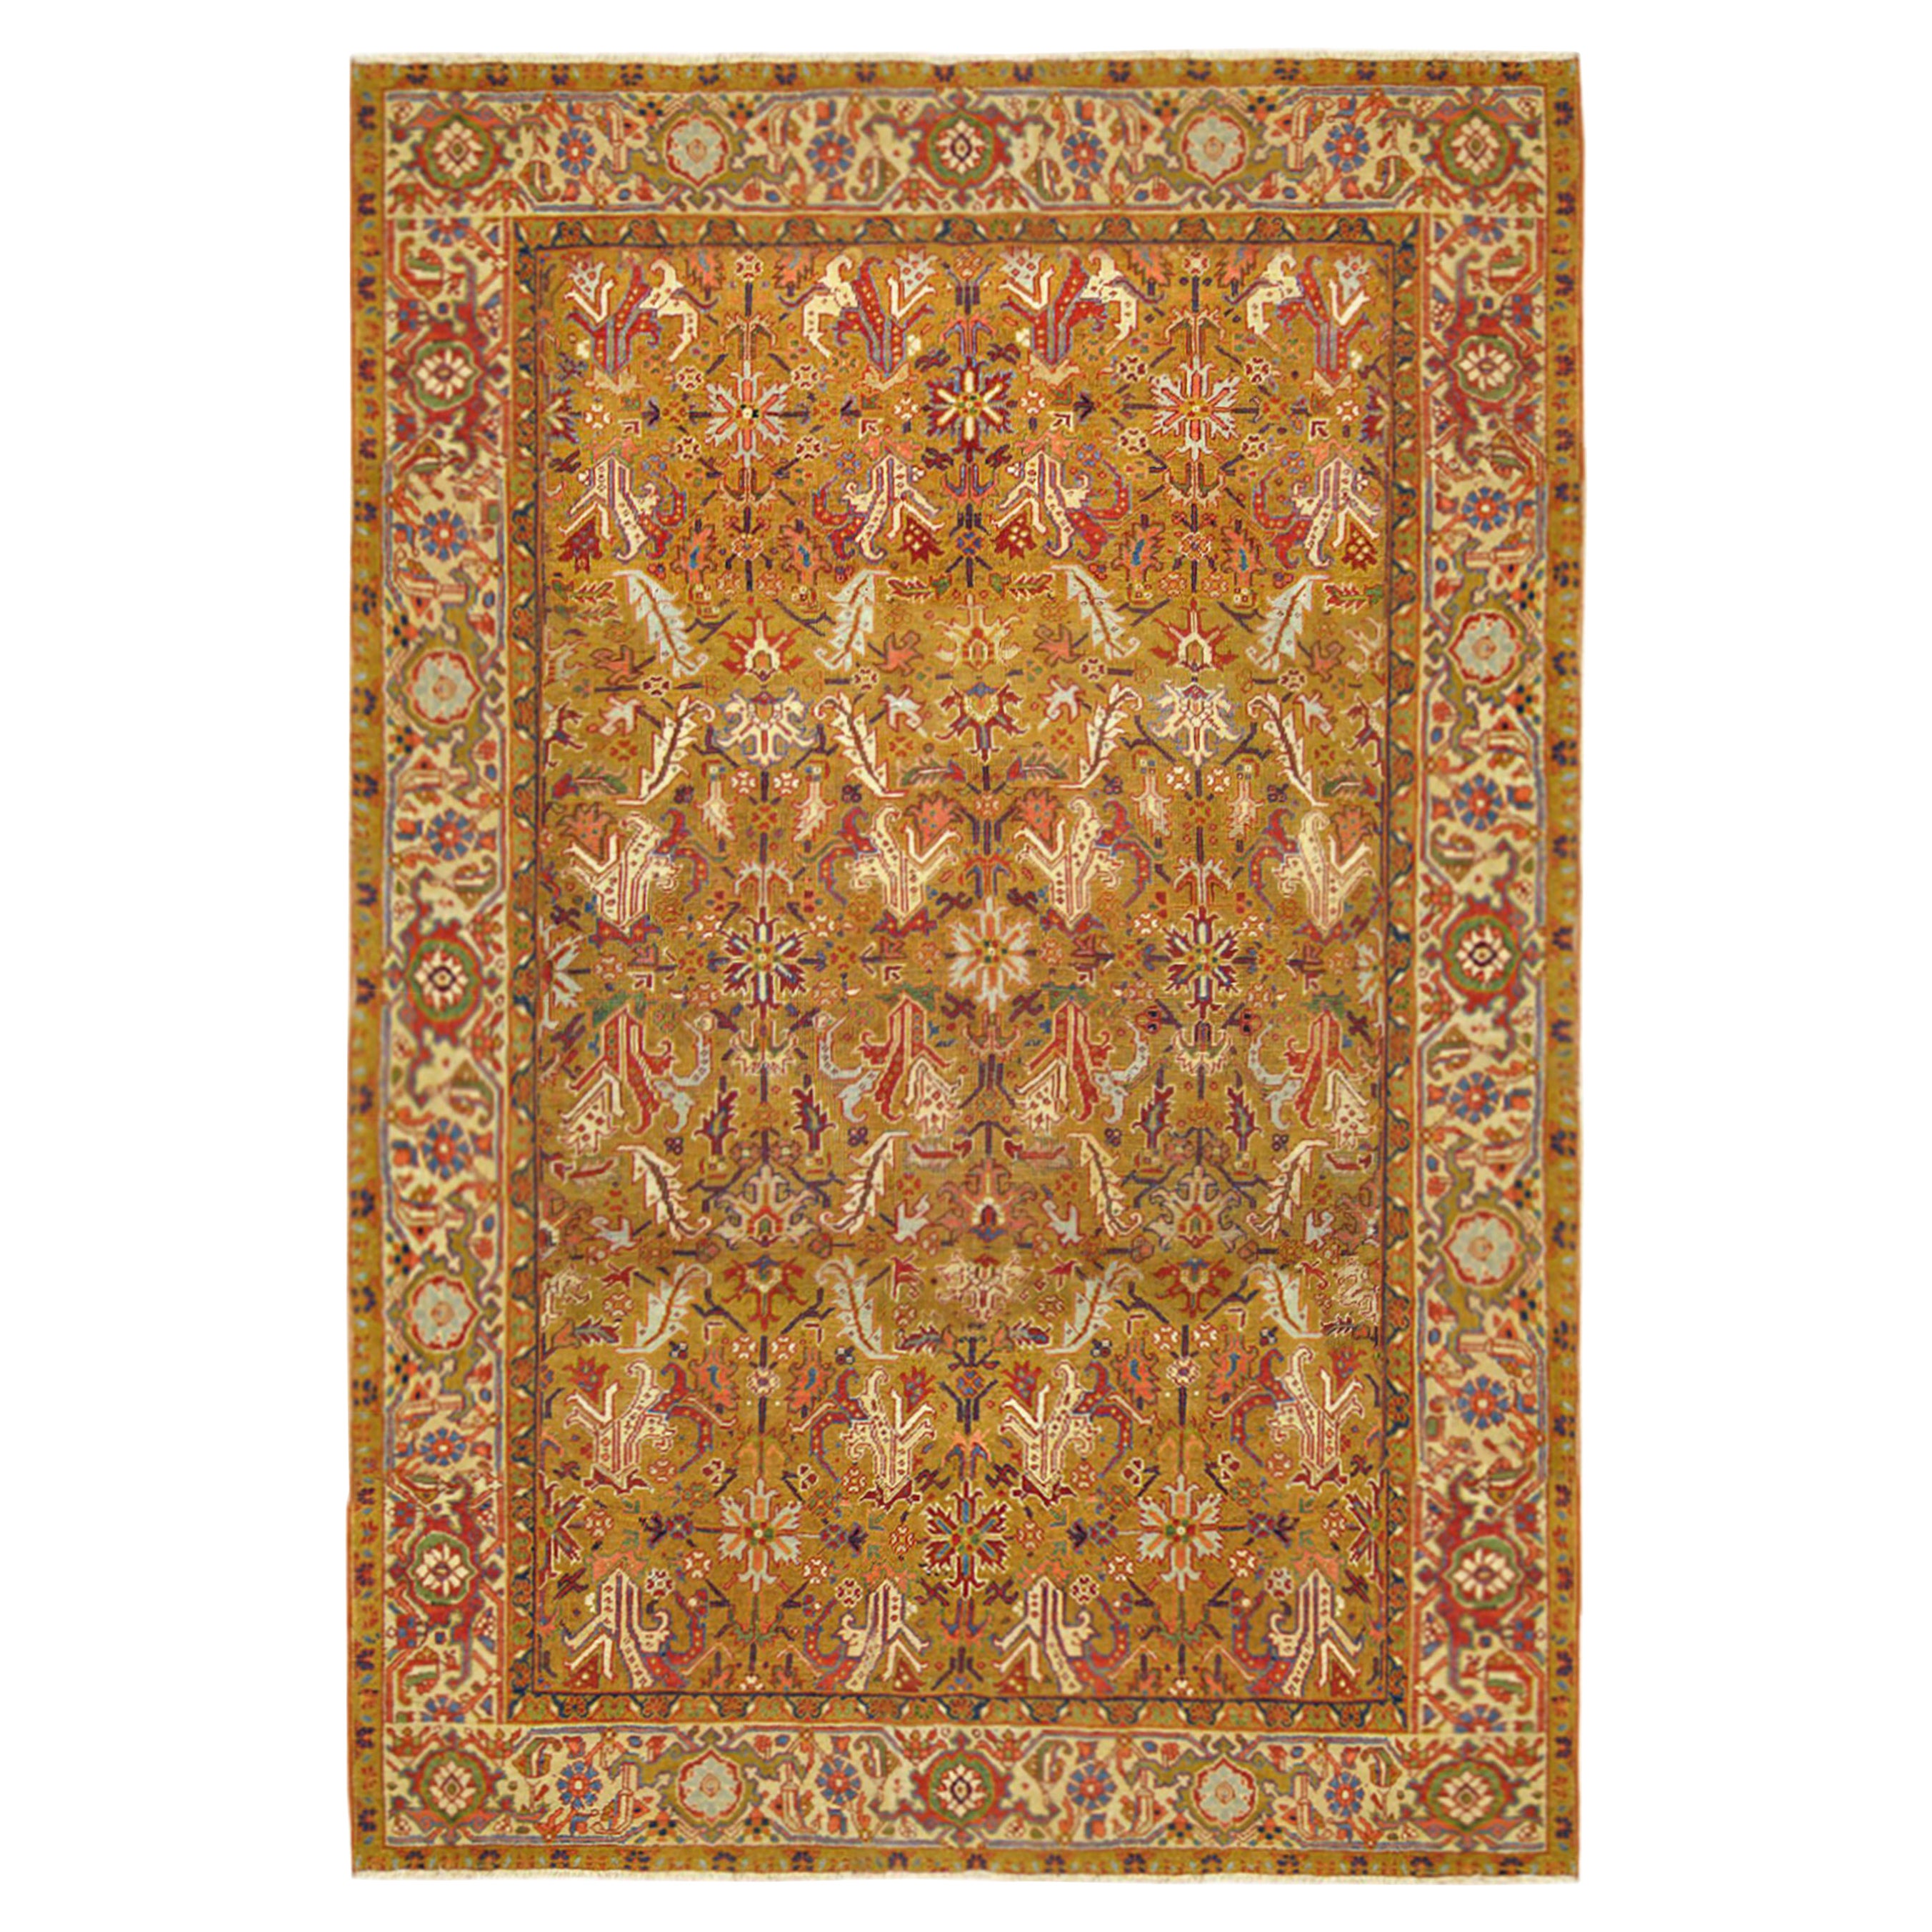 Antique Persian Heriz Oriental Rug, Room Size, W/ Symmetrical Design